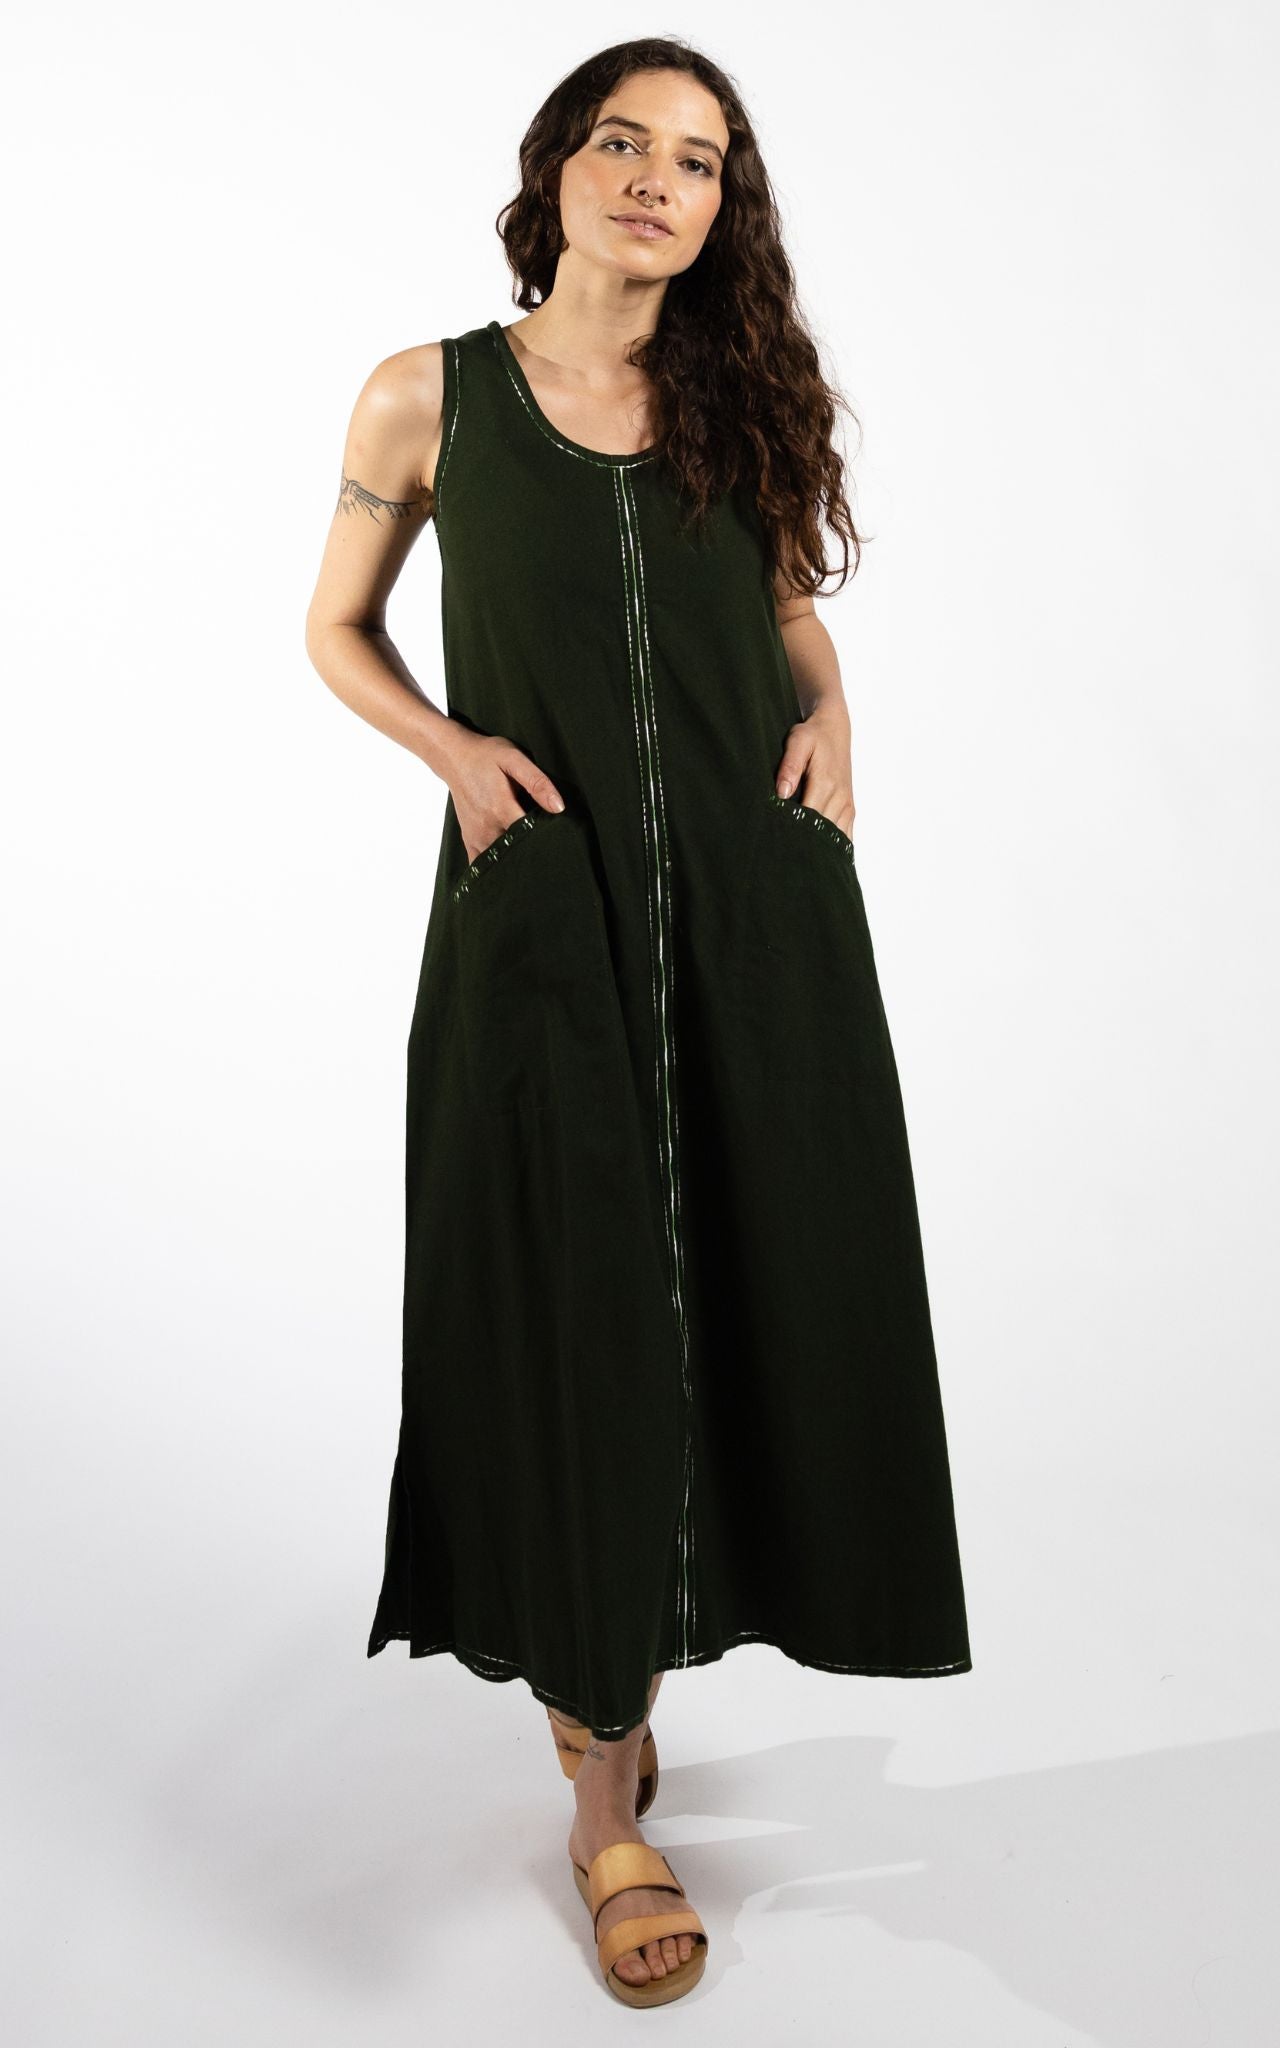 Surya Australia Ethical Cotton 'Calliope' Dress made in Nepal - Green